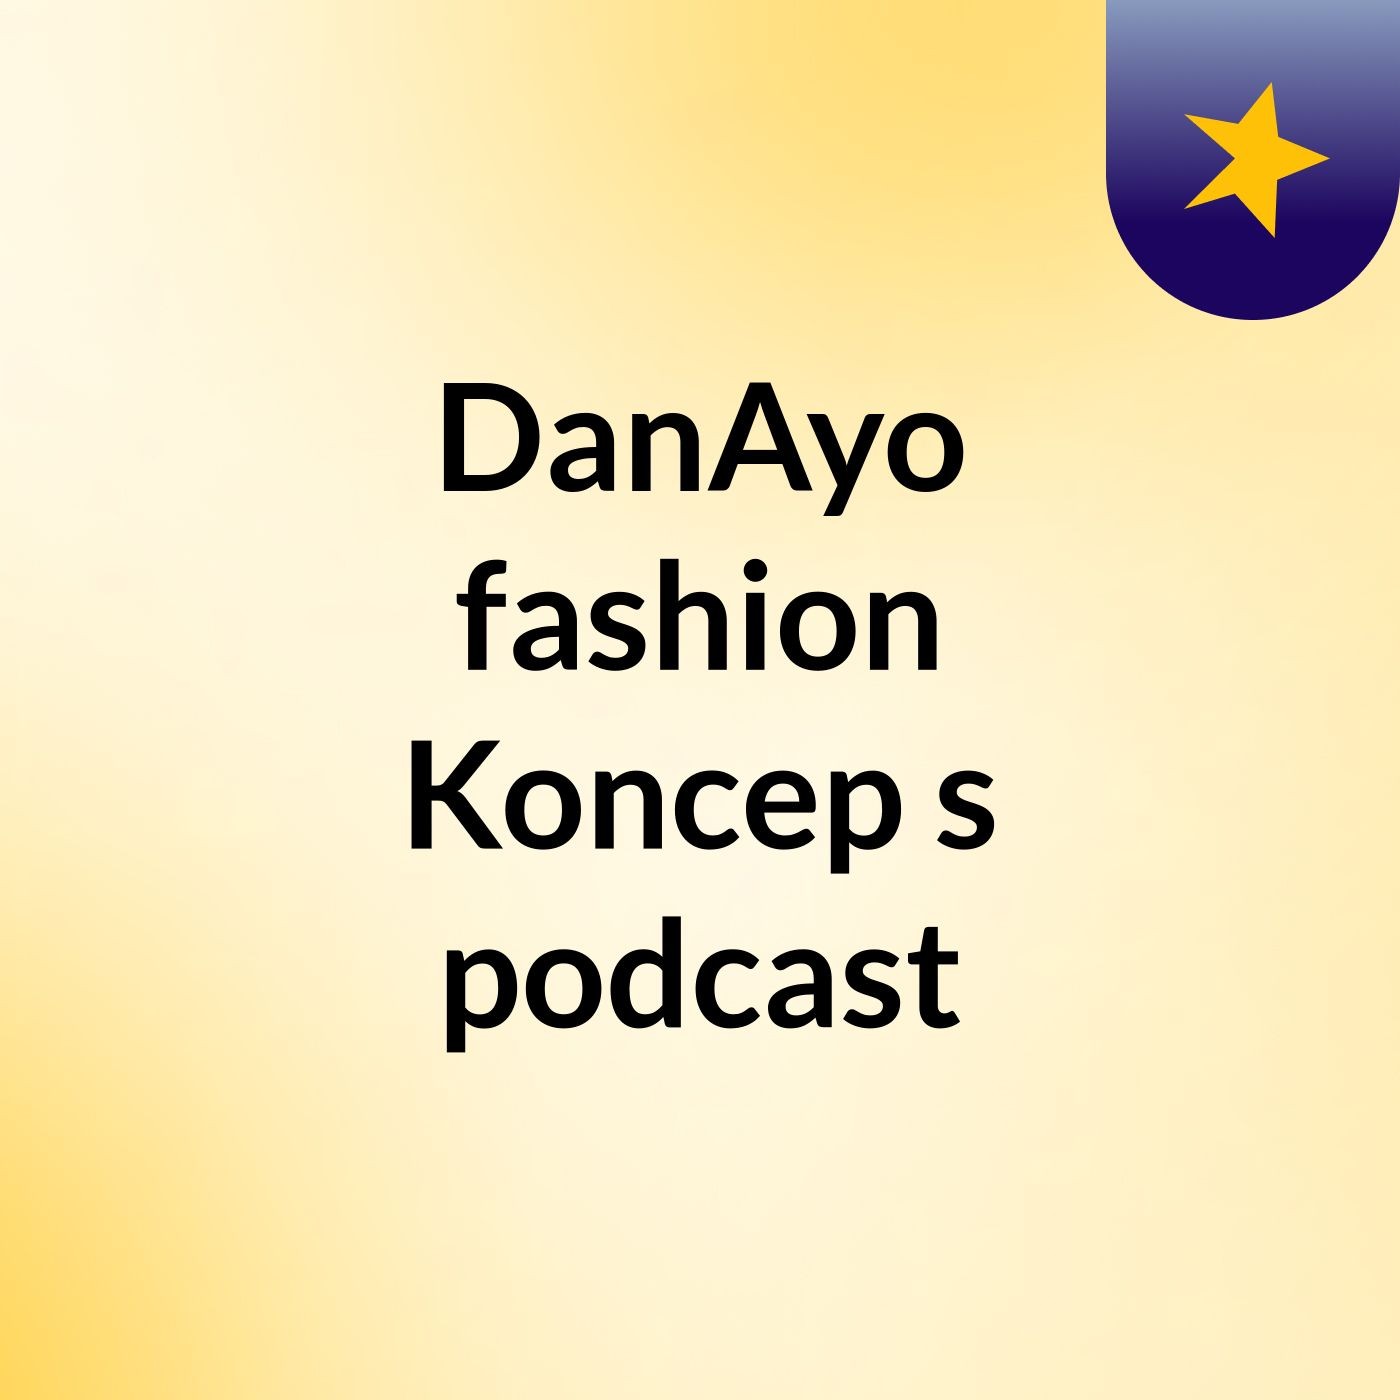 DanAyo fashion Koncep's podcast